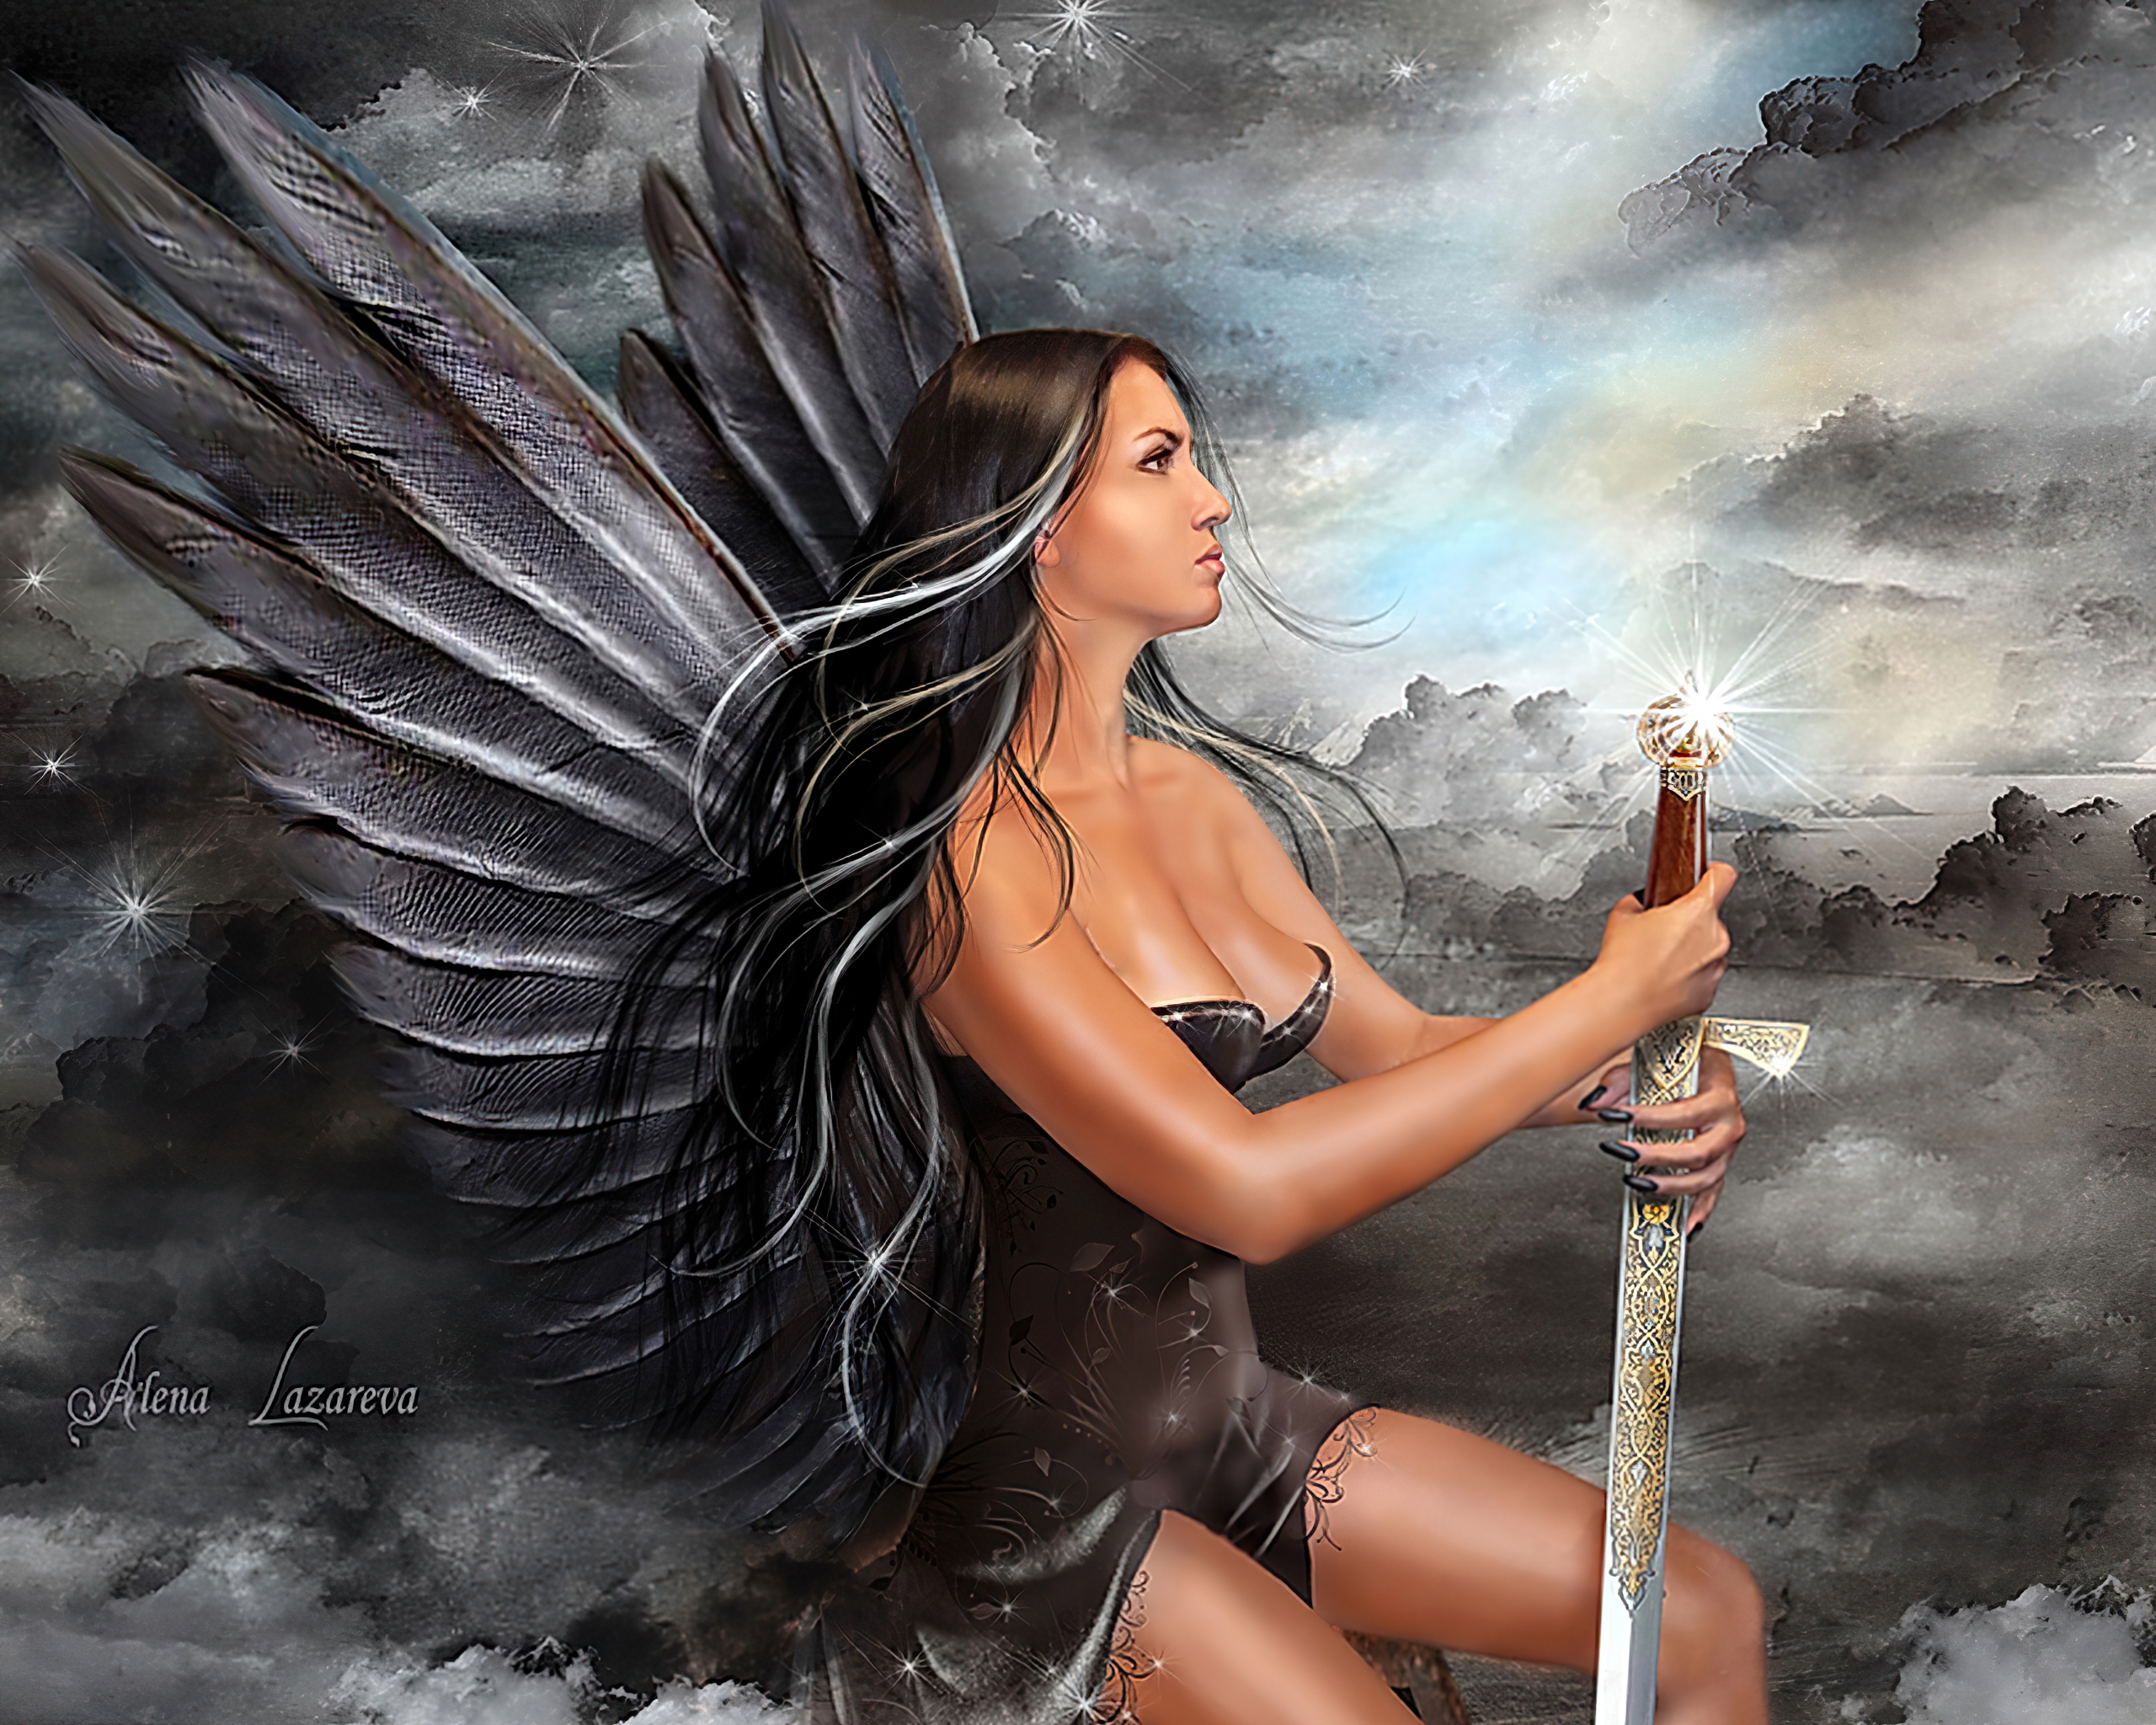 Ангел женщина с крыльями